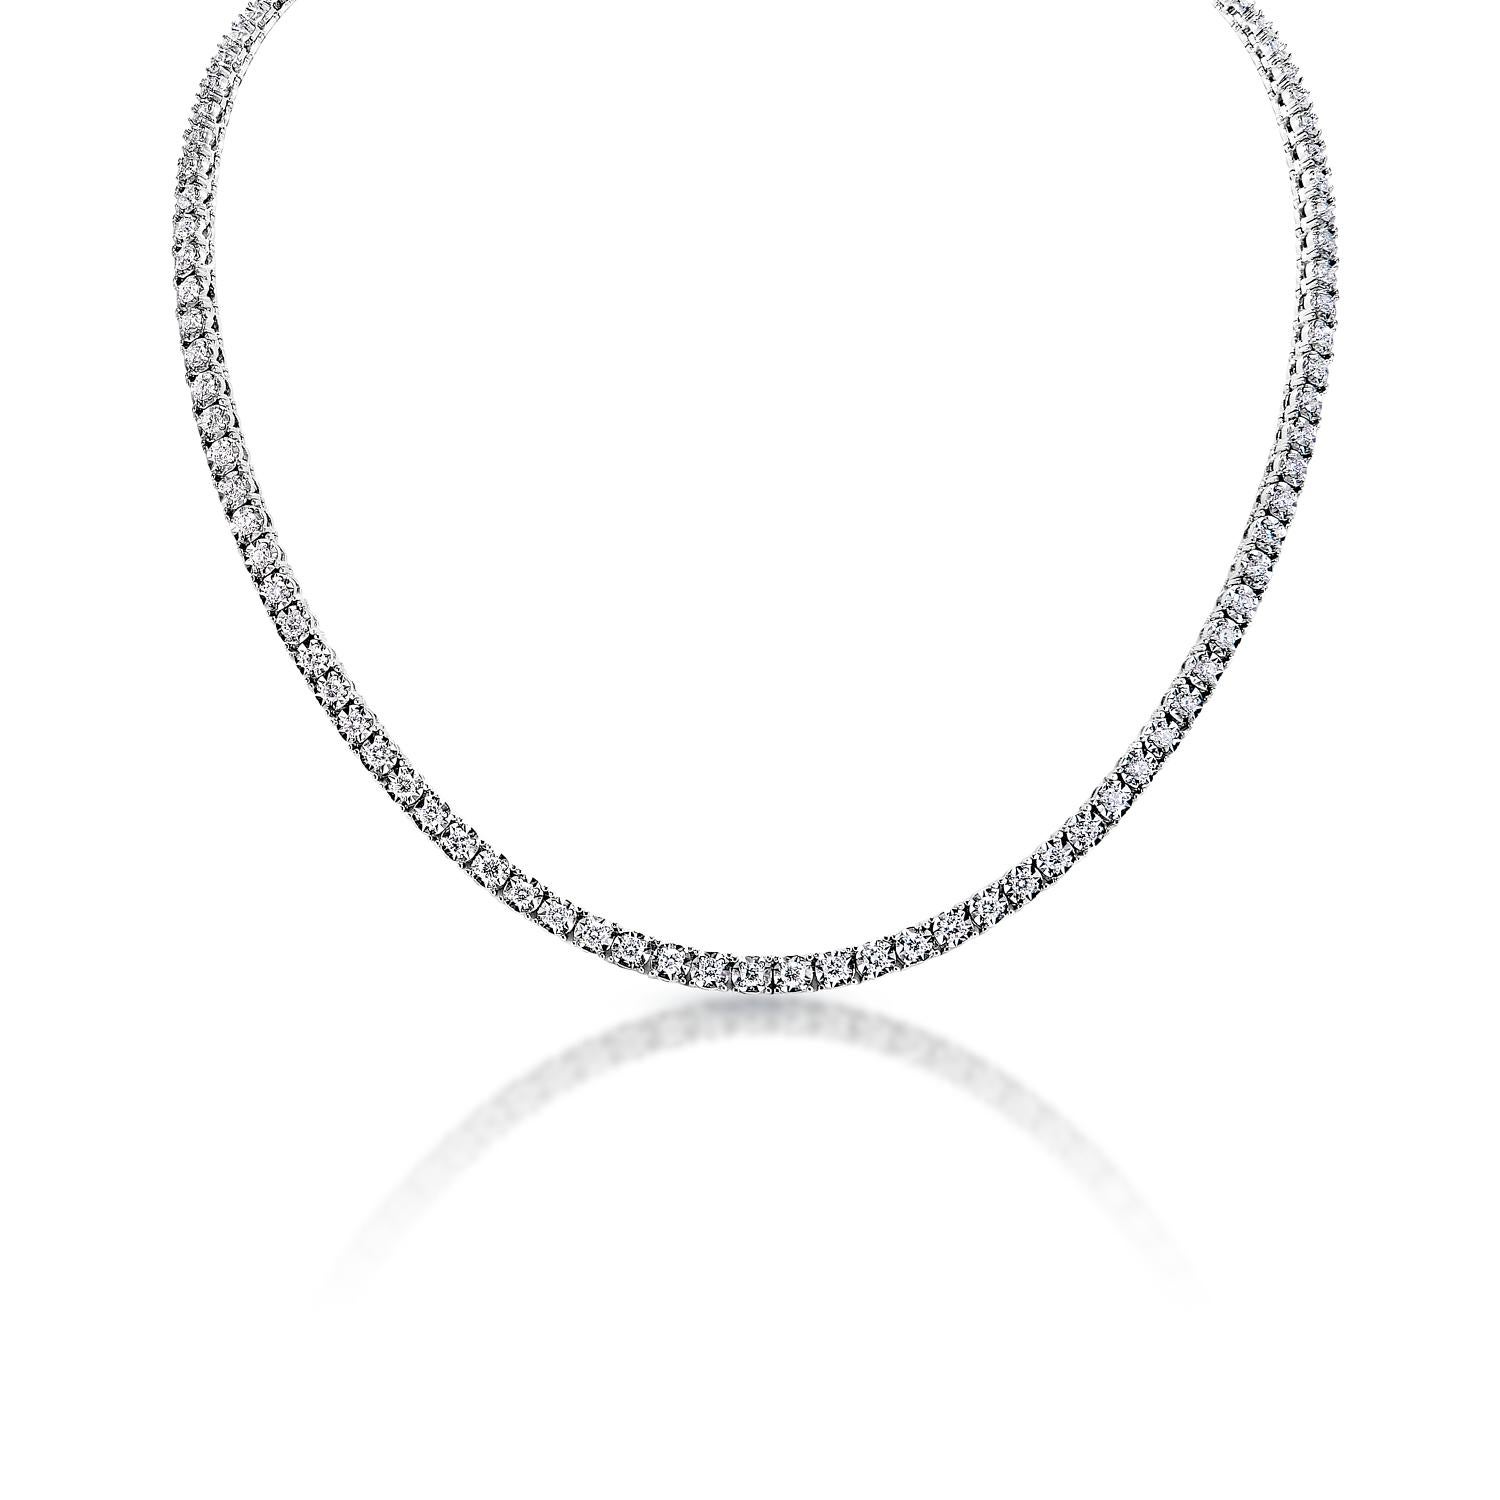 Diamond Tennis Necklace:

Carat Weight: 5.50 Carats
Style: Round Brilliant Cut
Chains: 14 Karat White Gold 25.90 grams